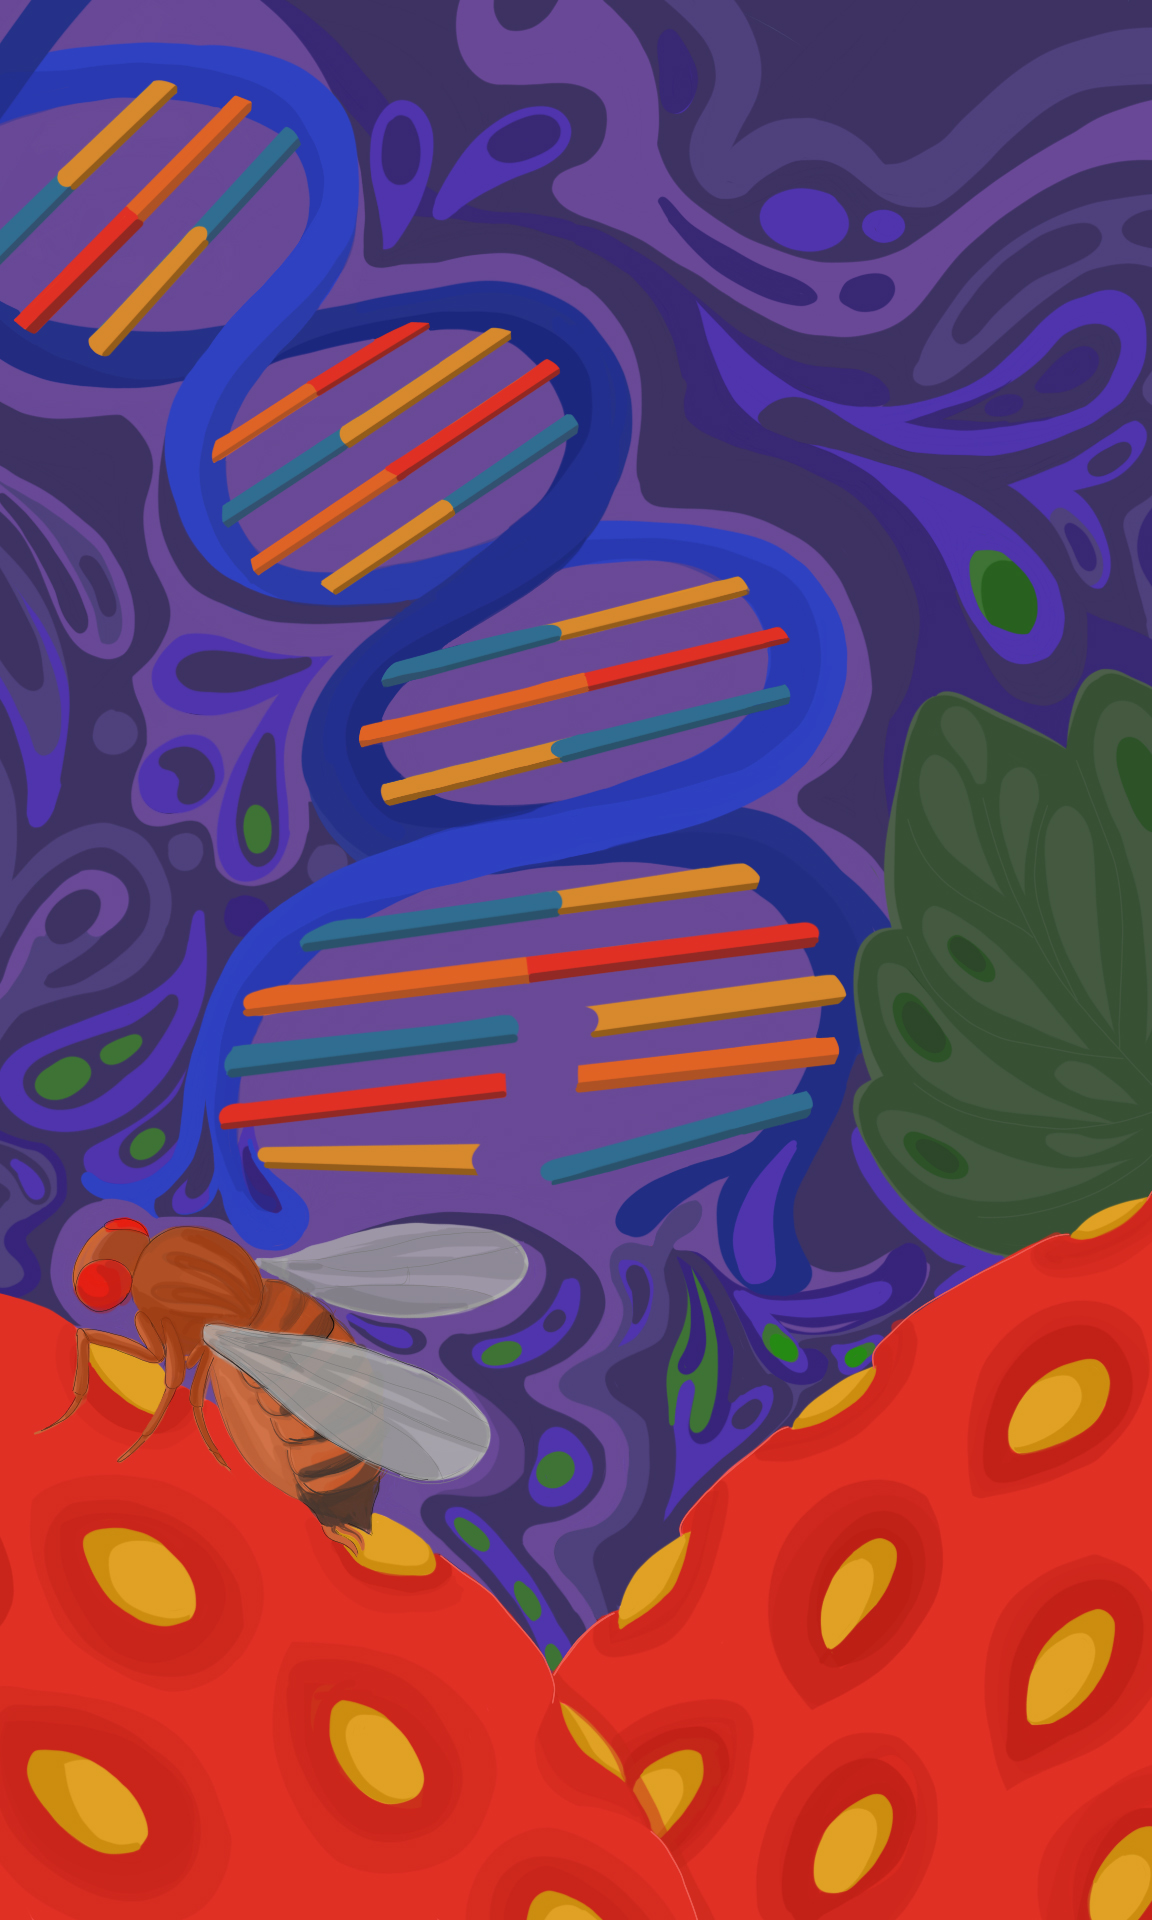 Artistic depiction of fruit and Drosophila suzukii